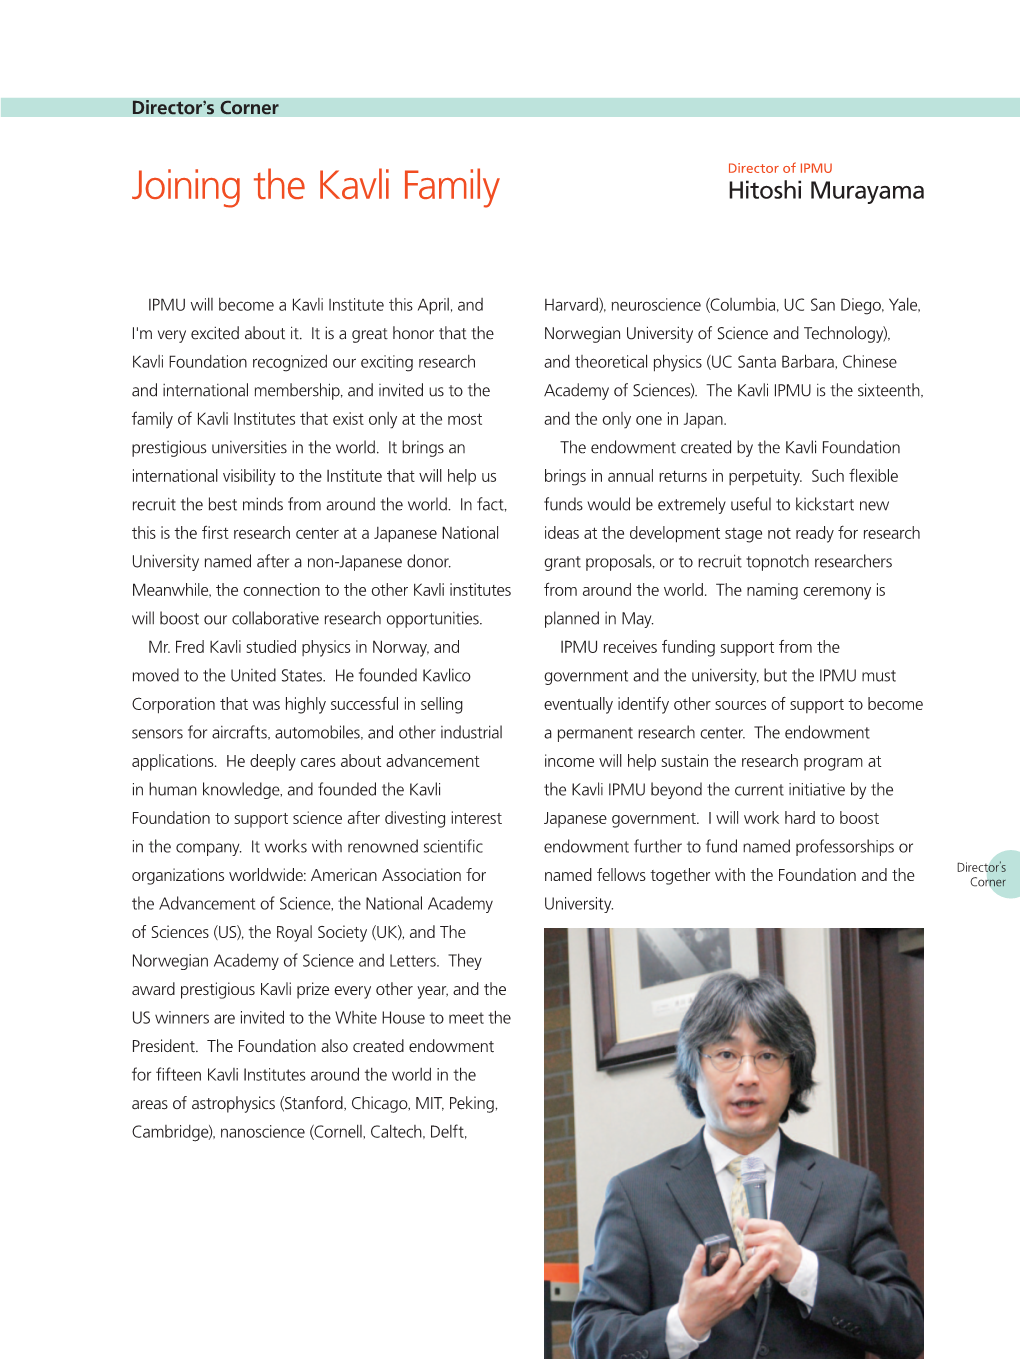 Joining the Kavli Family Hitoshi Murayama